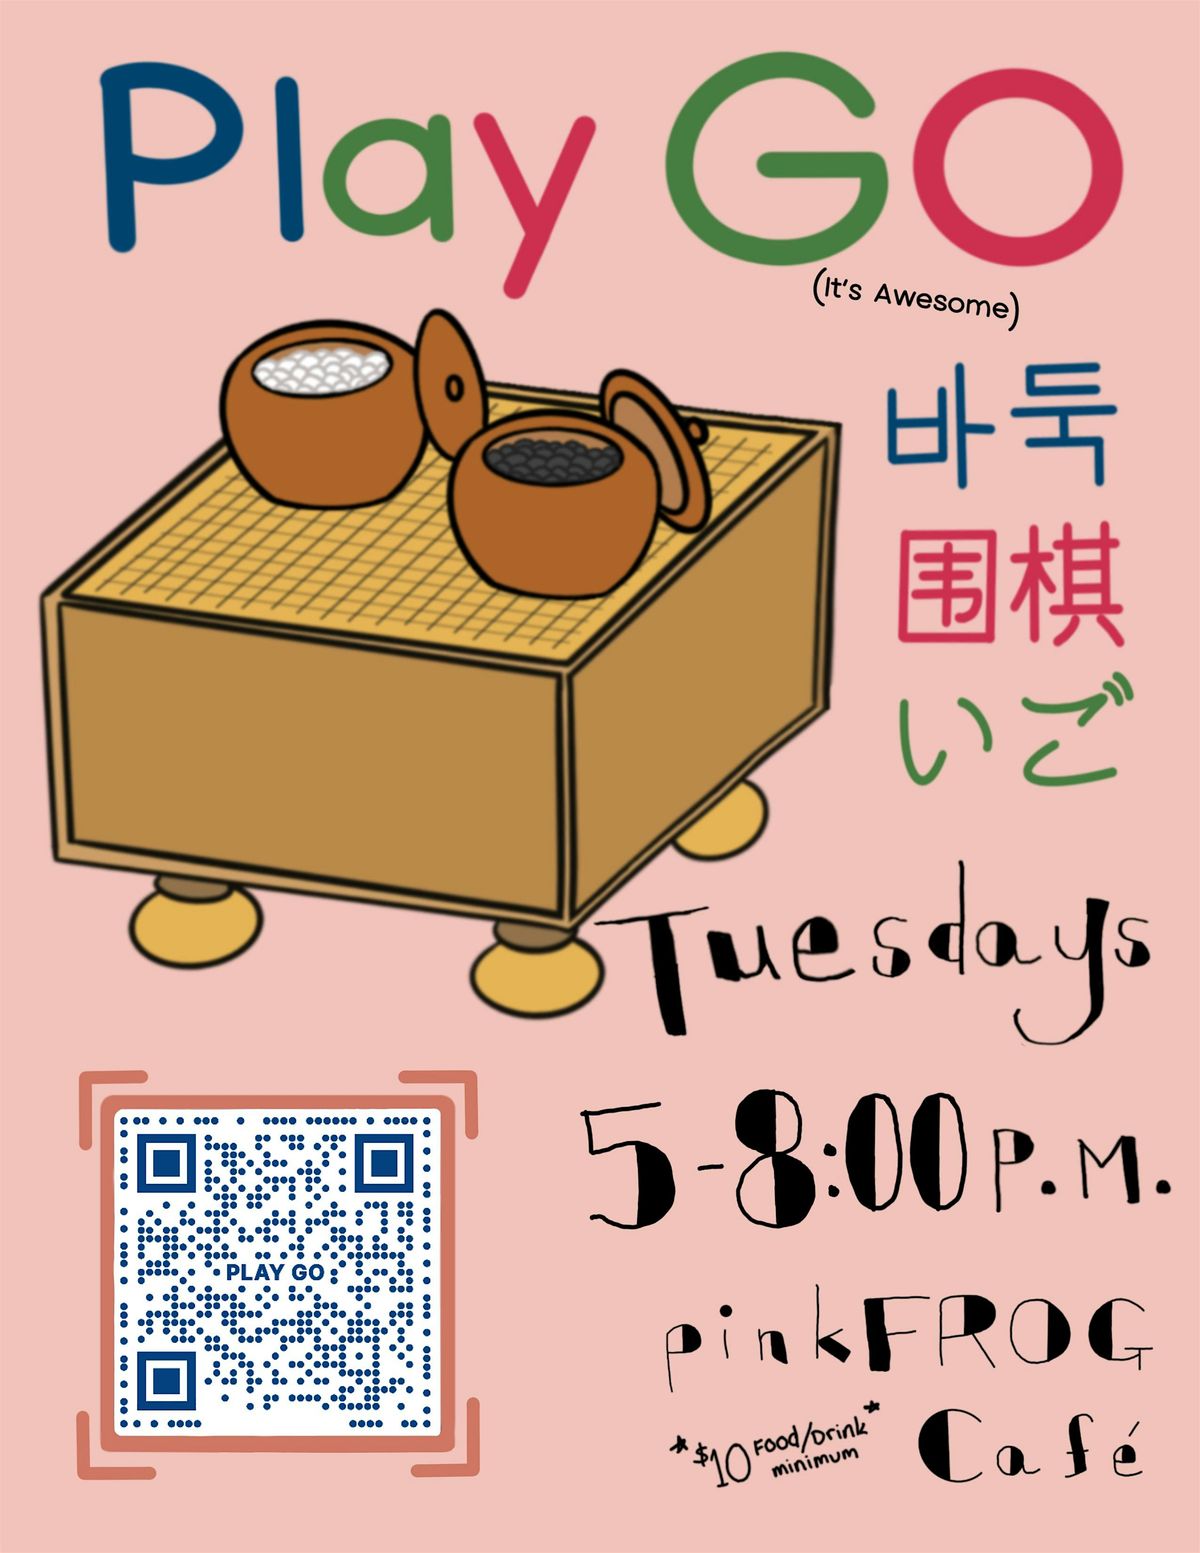 pinkFROG cafe Play Go Tuesday Meetup